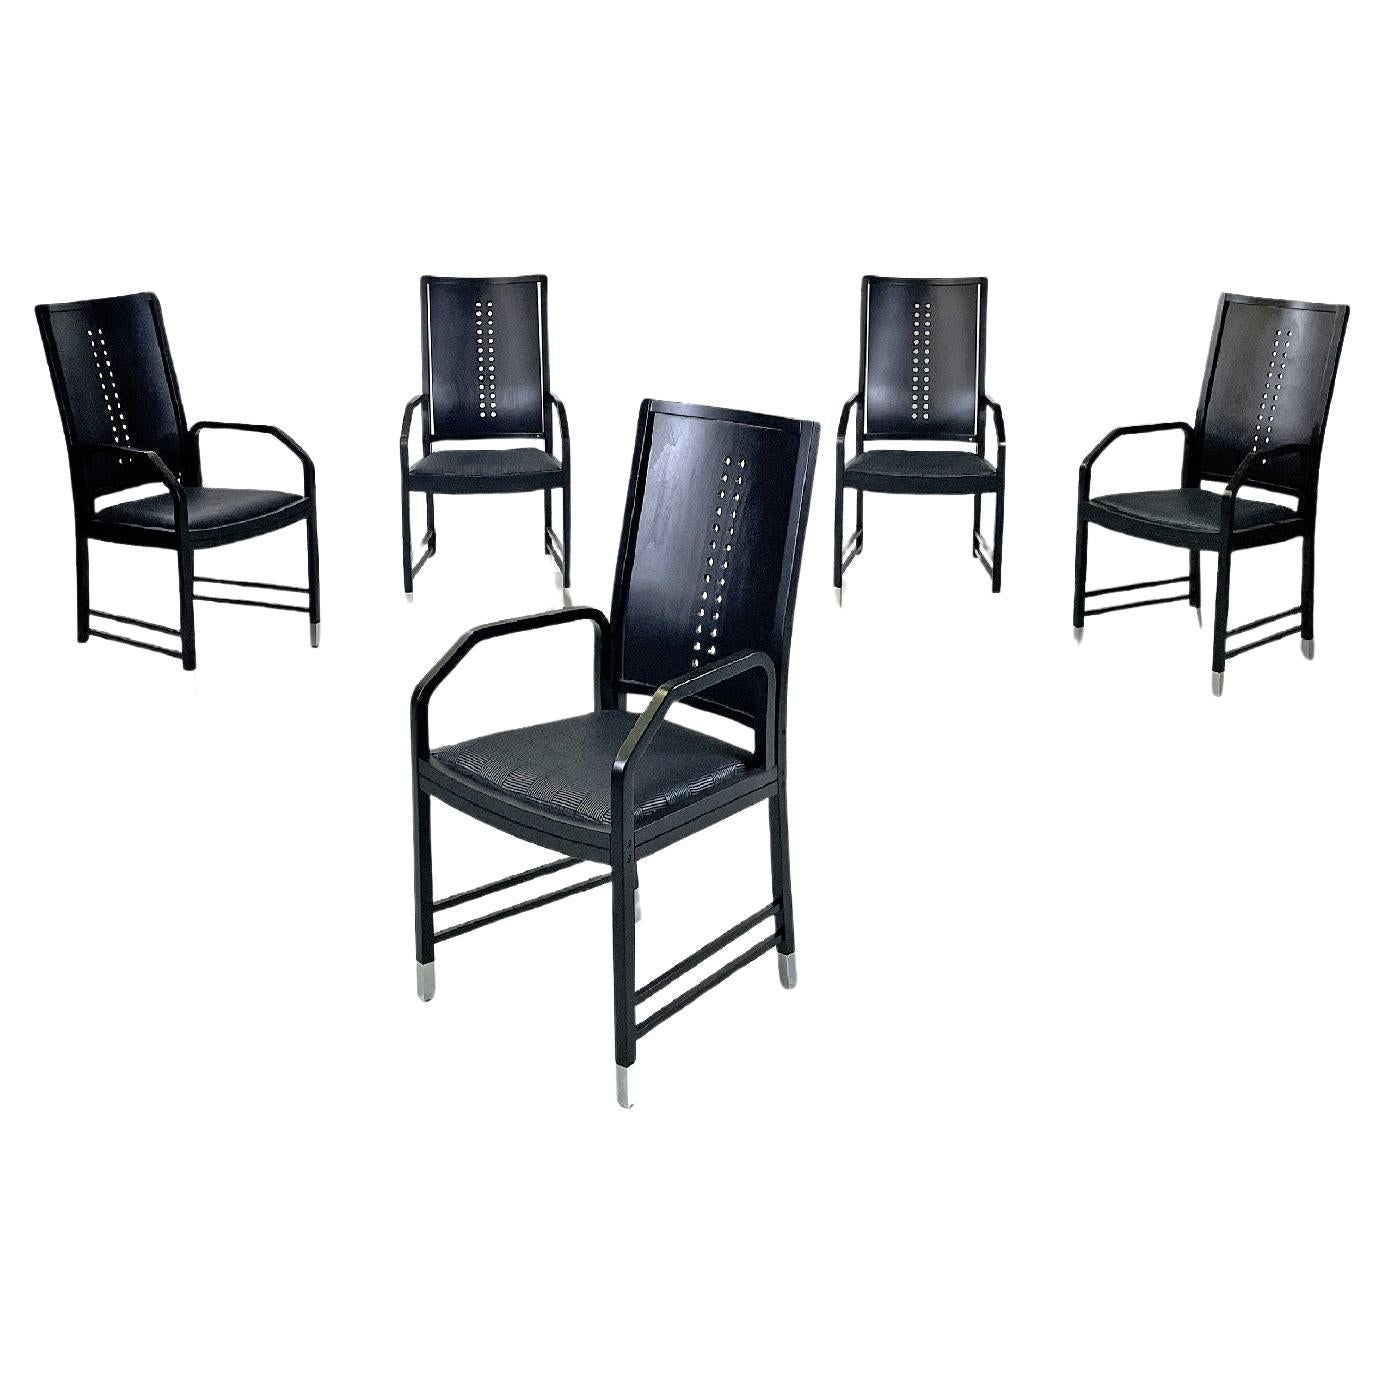 Austrian modern black wooden chairs by Ernst W. Beranek for Thonet, 1990s For Sale